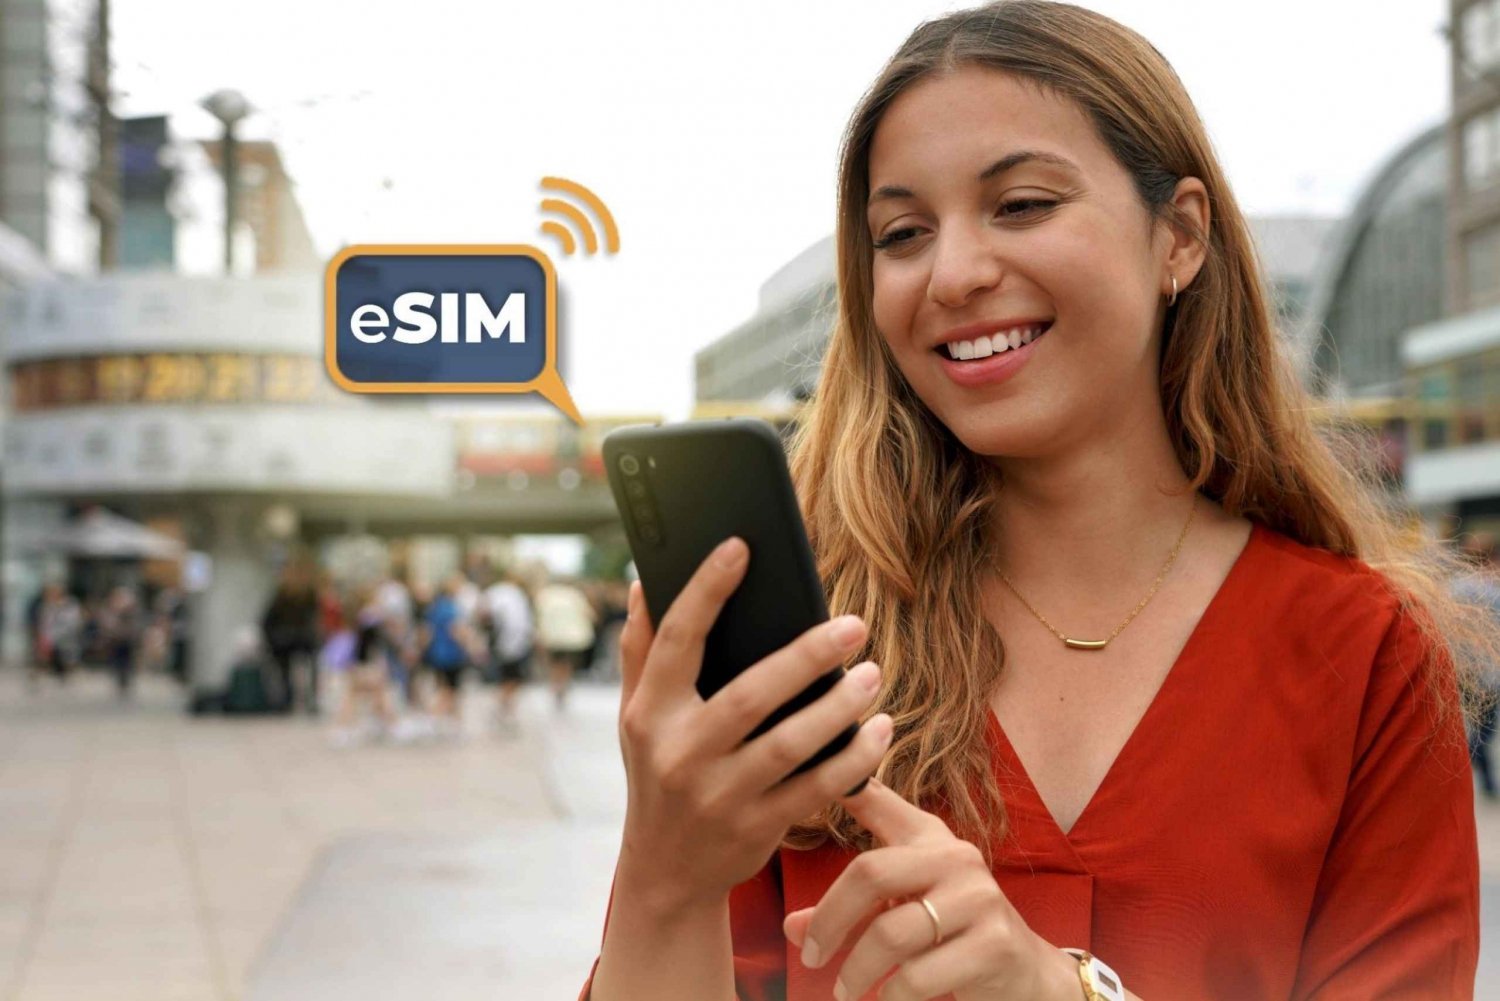 Berliini&Saksa: eSIM-mobiilidatan avulla rajoittamaton EU-internet.